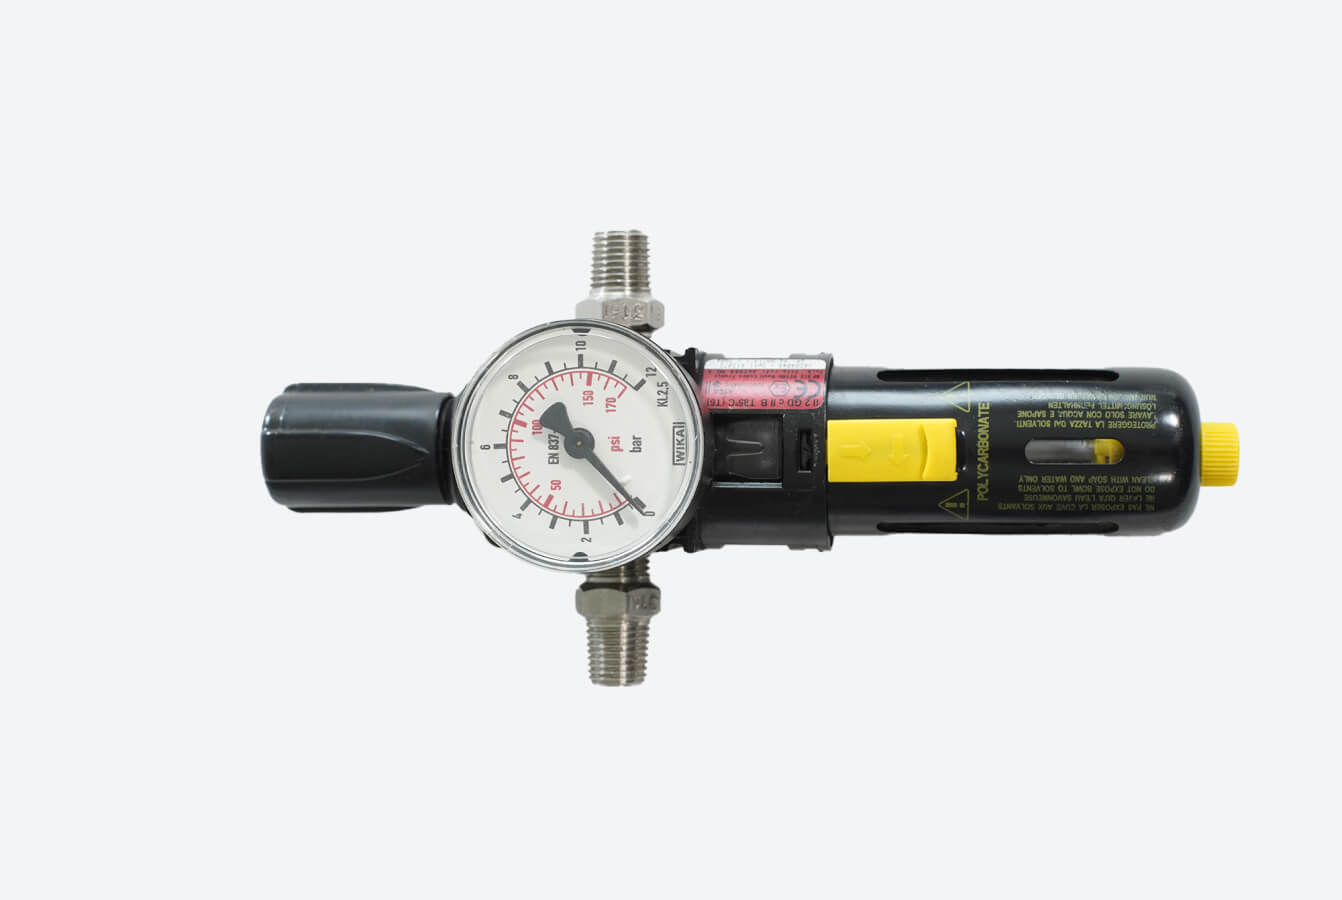 Air filter regulator with pressure gauge